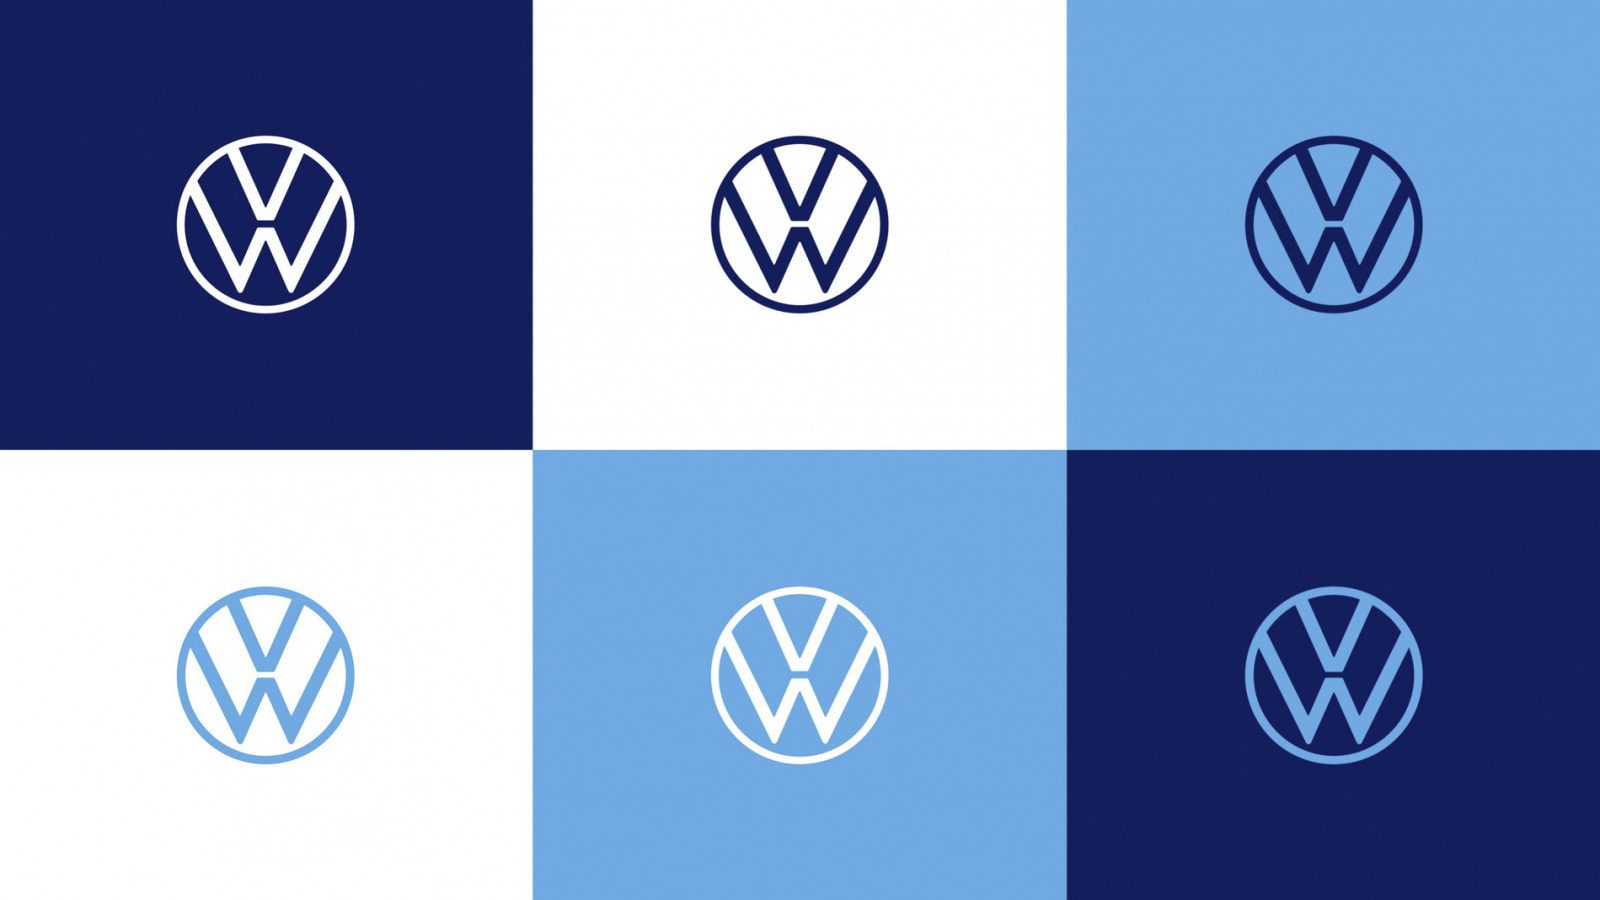 Vw Brand Design Logo 0616 2 画像 フォルクスワーゲンがデジタル時代にマッチする新ブランドデザイン 新ブランドロゴに変身 Clicccar Com